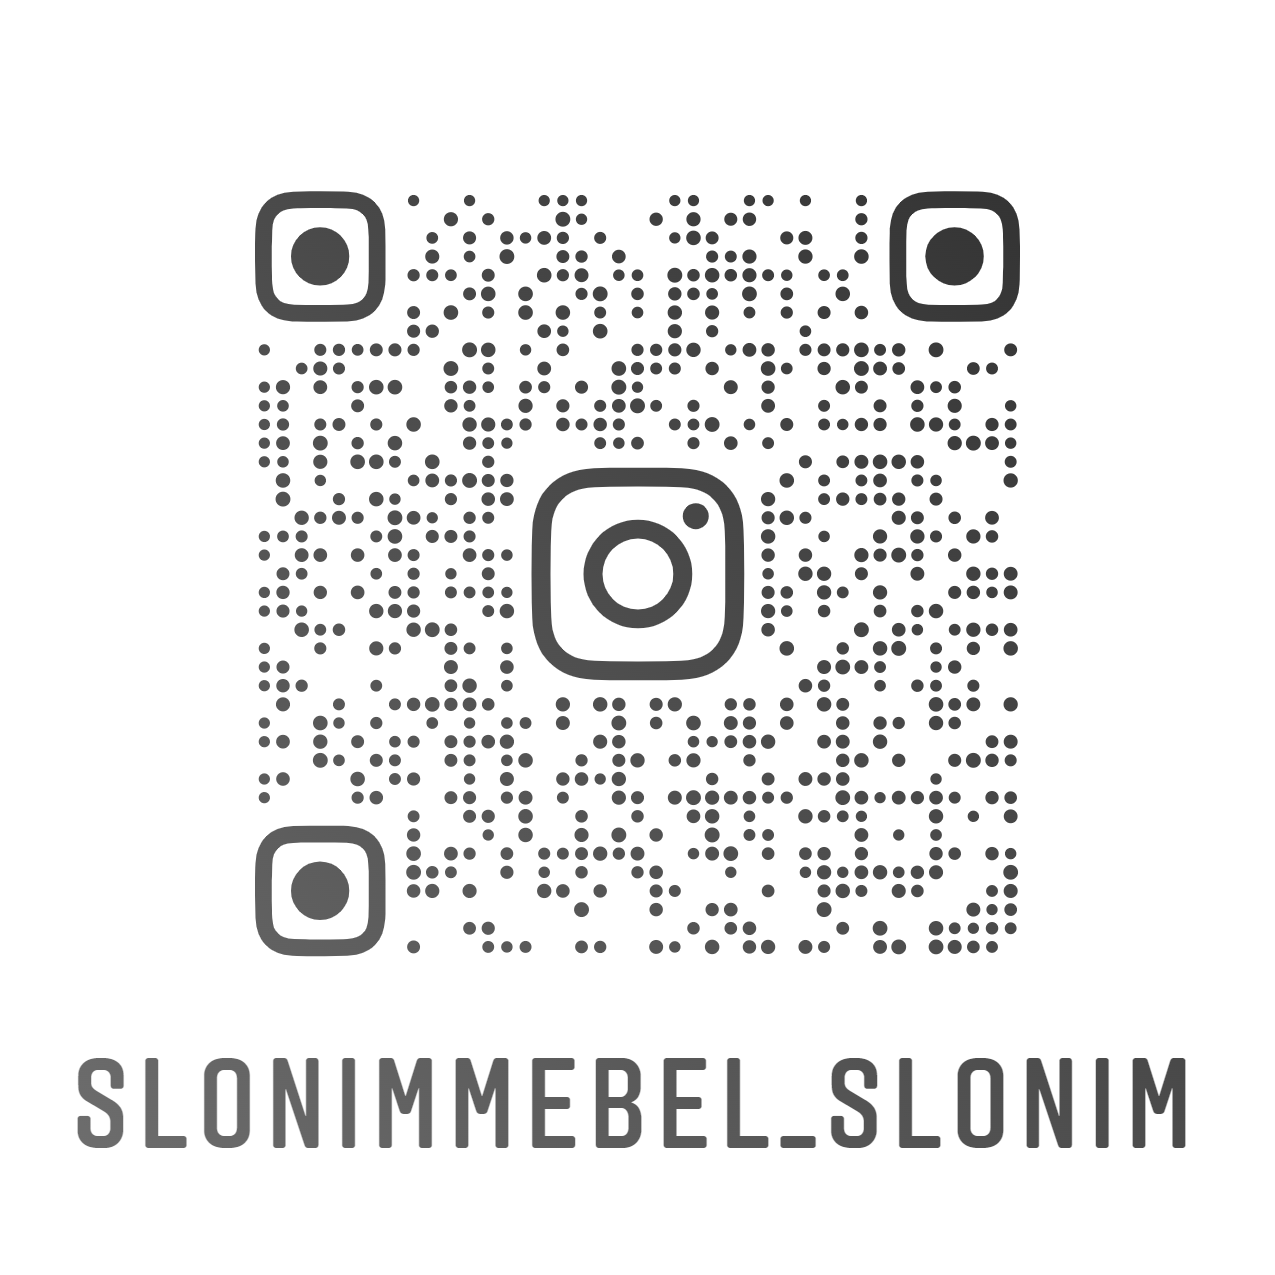 slonimmebel_slonim_nametag (1).png